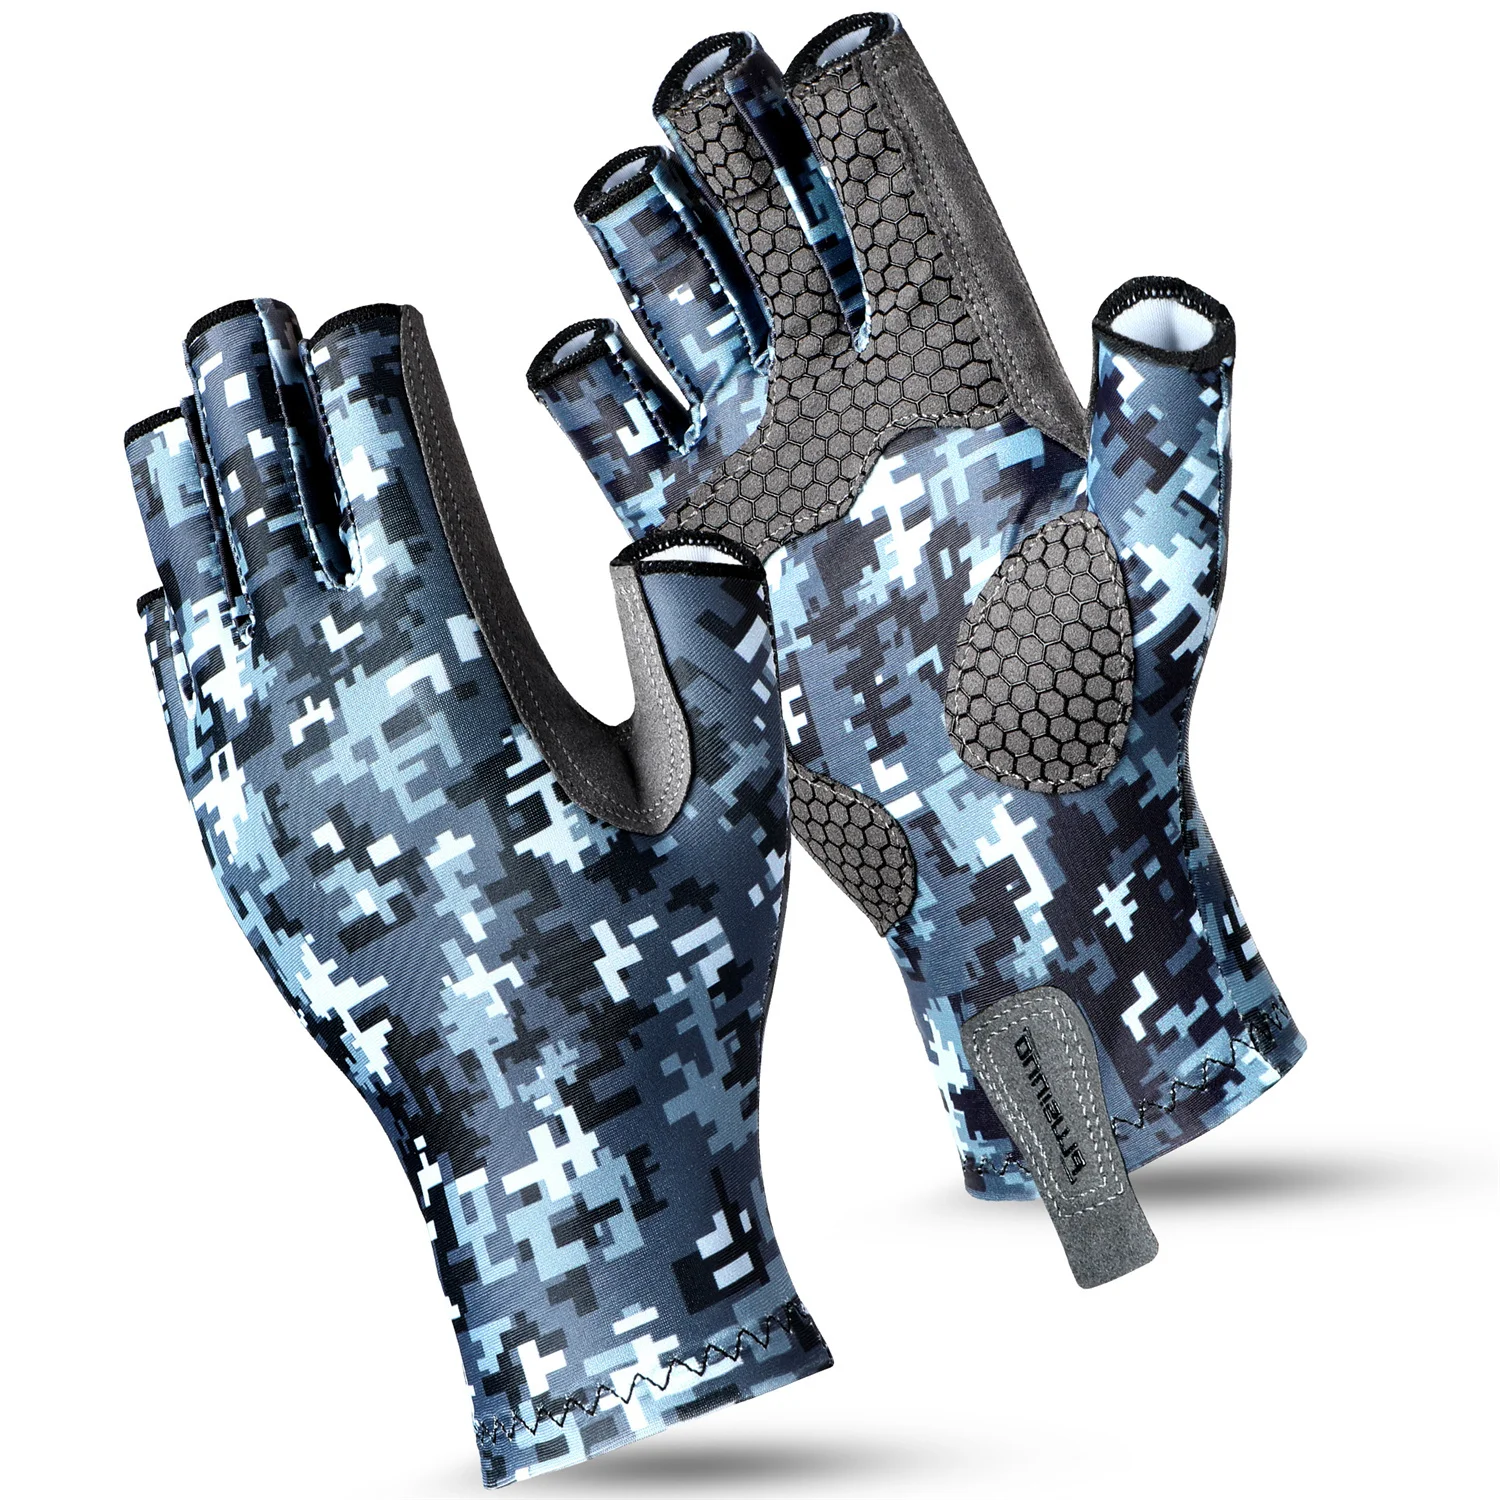 PLUSINNO Fishing Gloves UPF50+ Sun UV Protection Kayak Gloves for